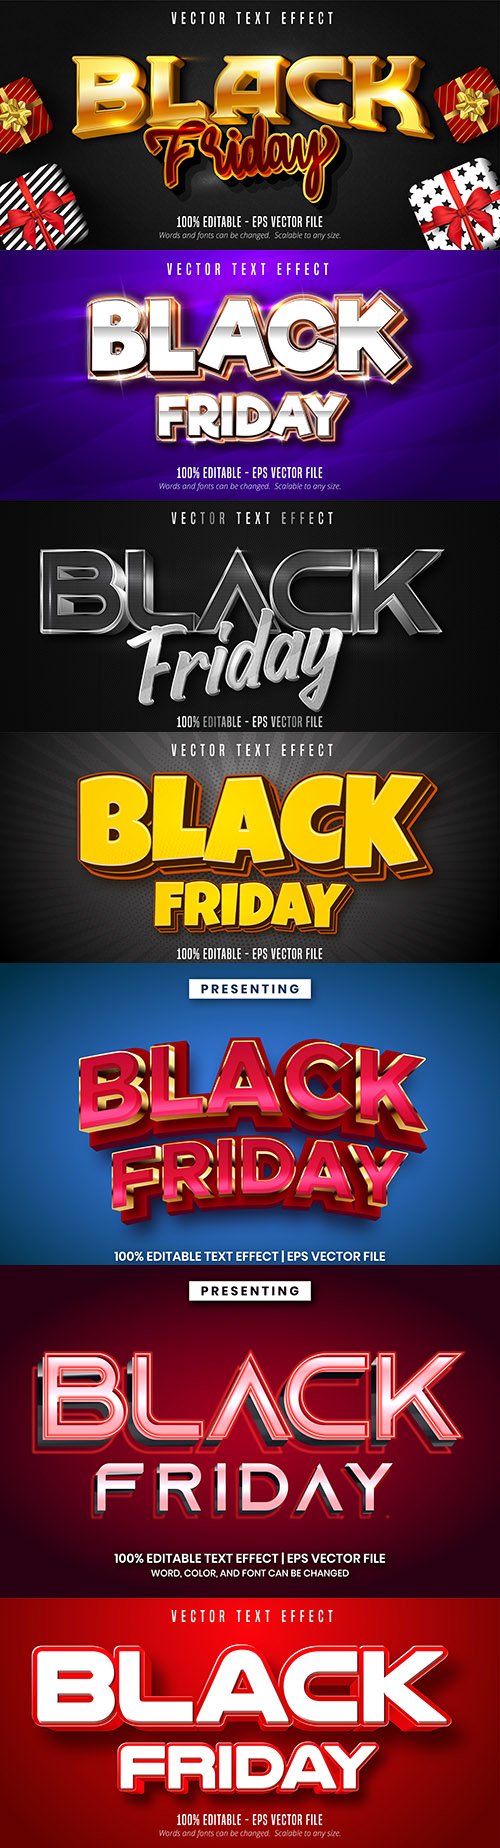 Black Friday Editable font effect text illustration design